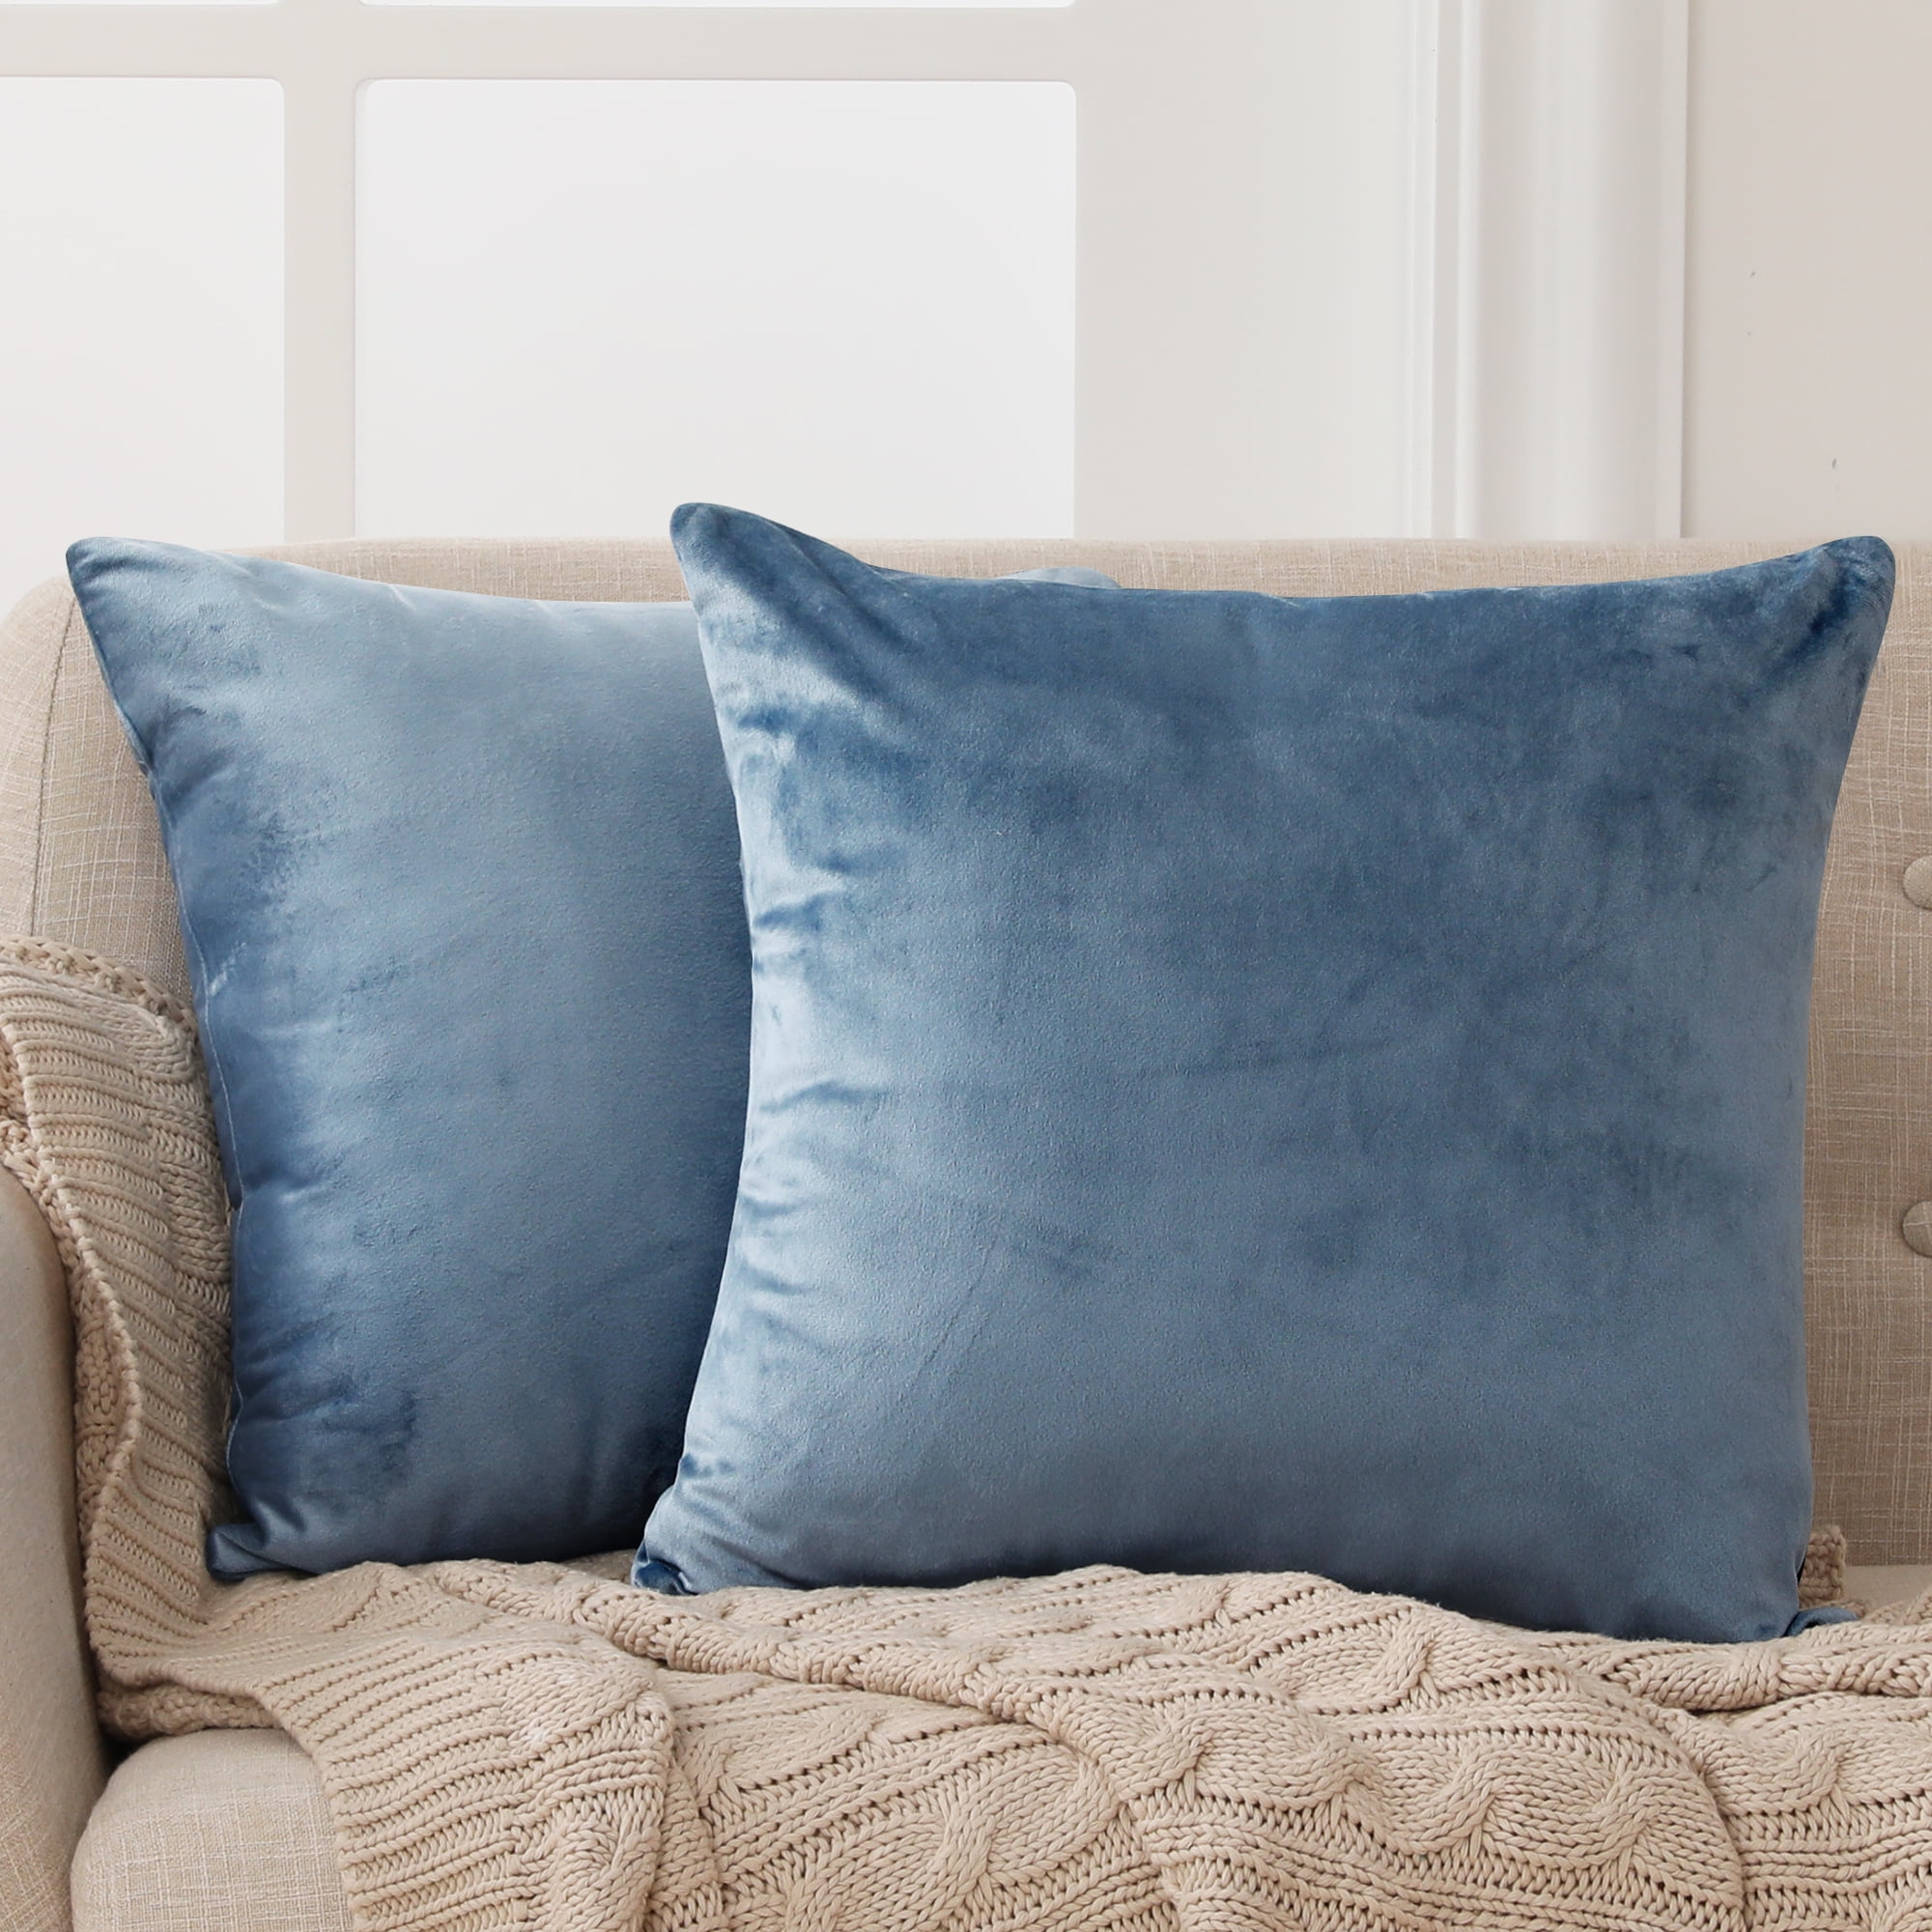 2 Pack Original Striped Velvet Square Decorative Pillow Cases for Farmhouse Couch DEZENE 16x16 Blue Throw Pillow Covers